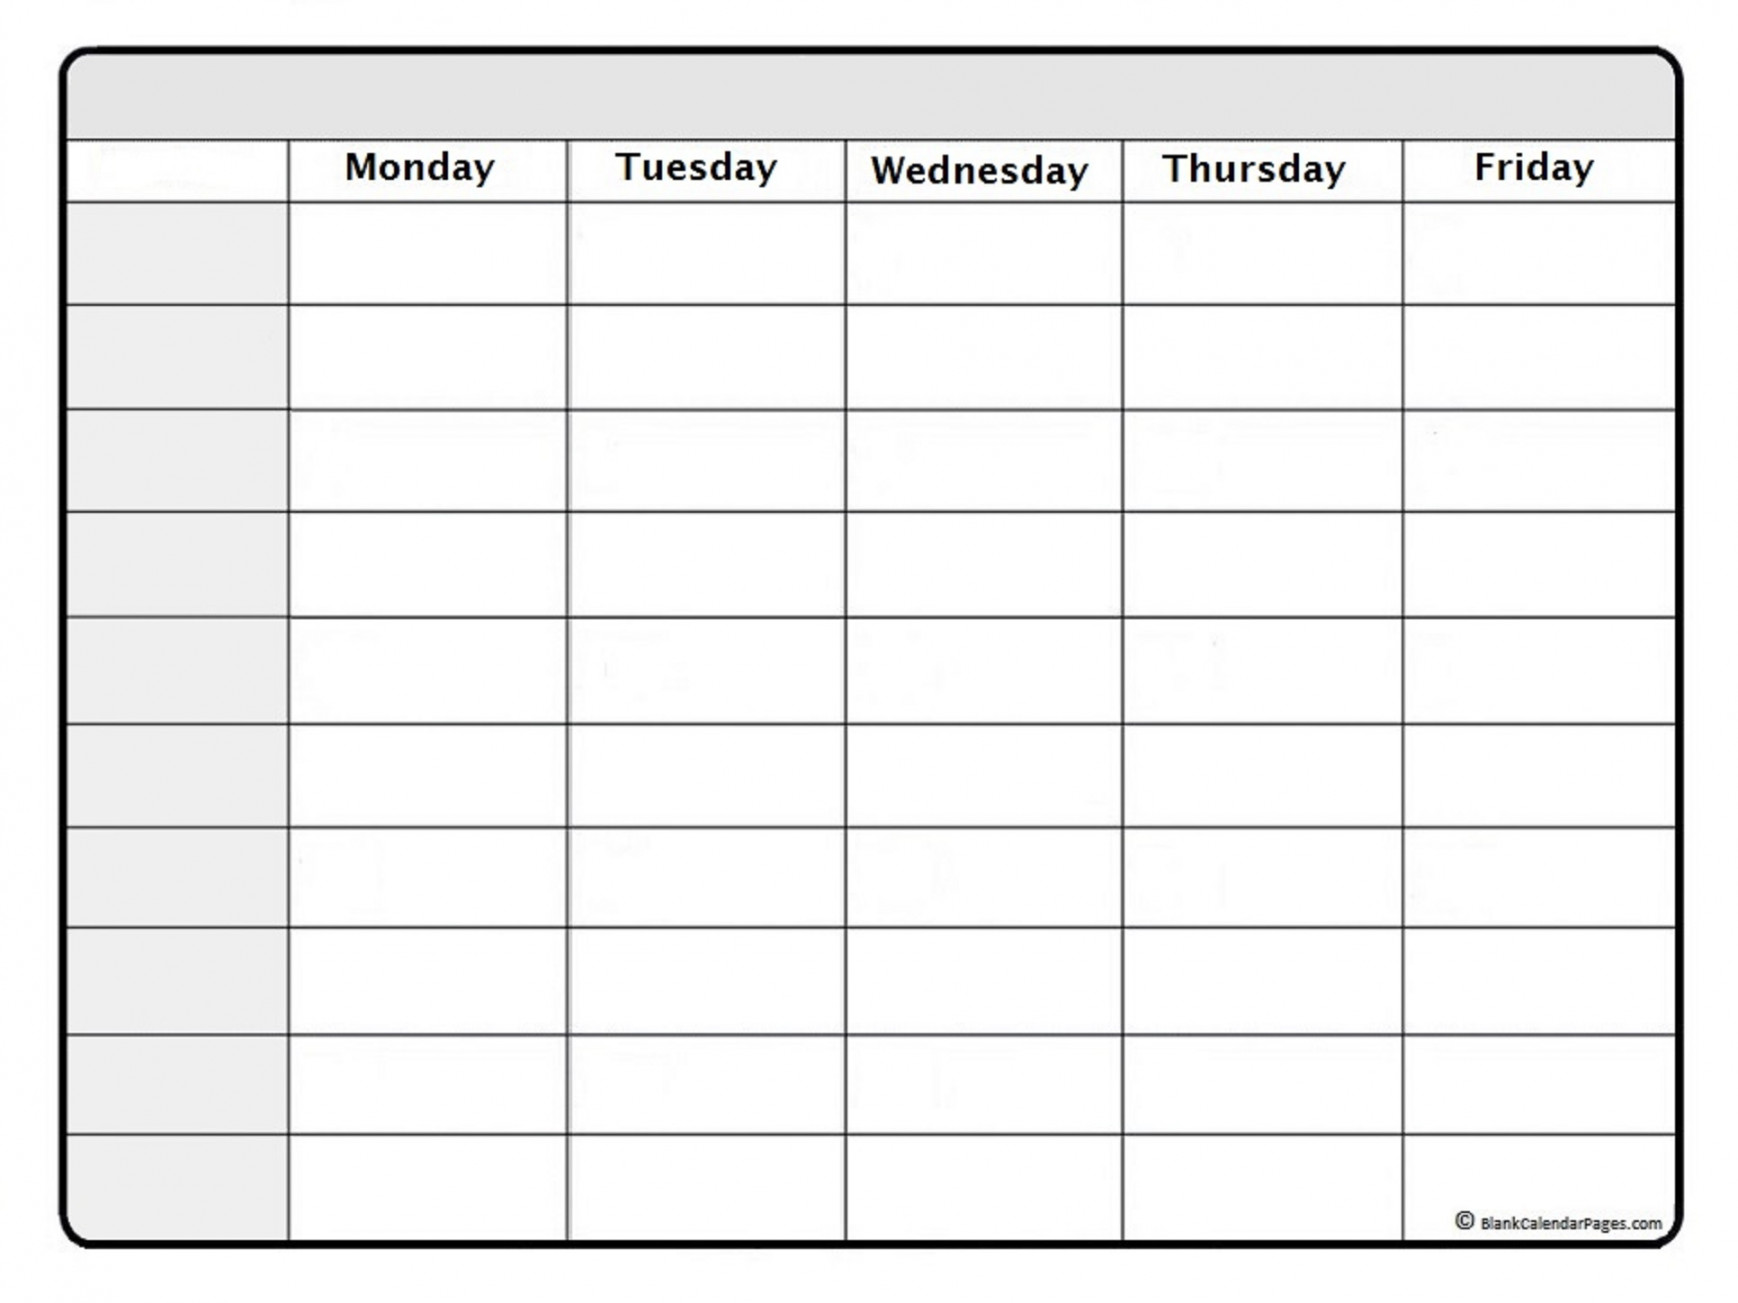 October  weekly calendar  October  weekly calendar template